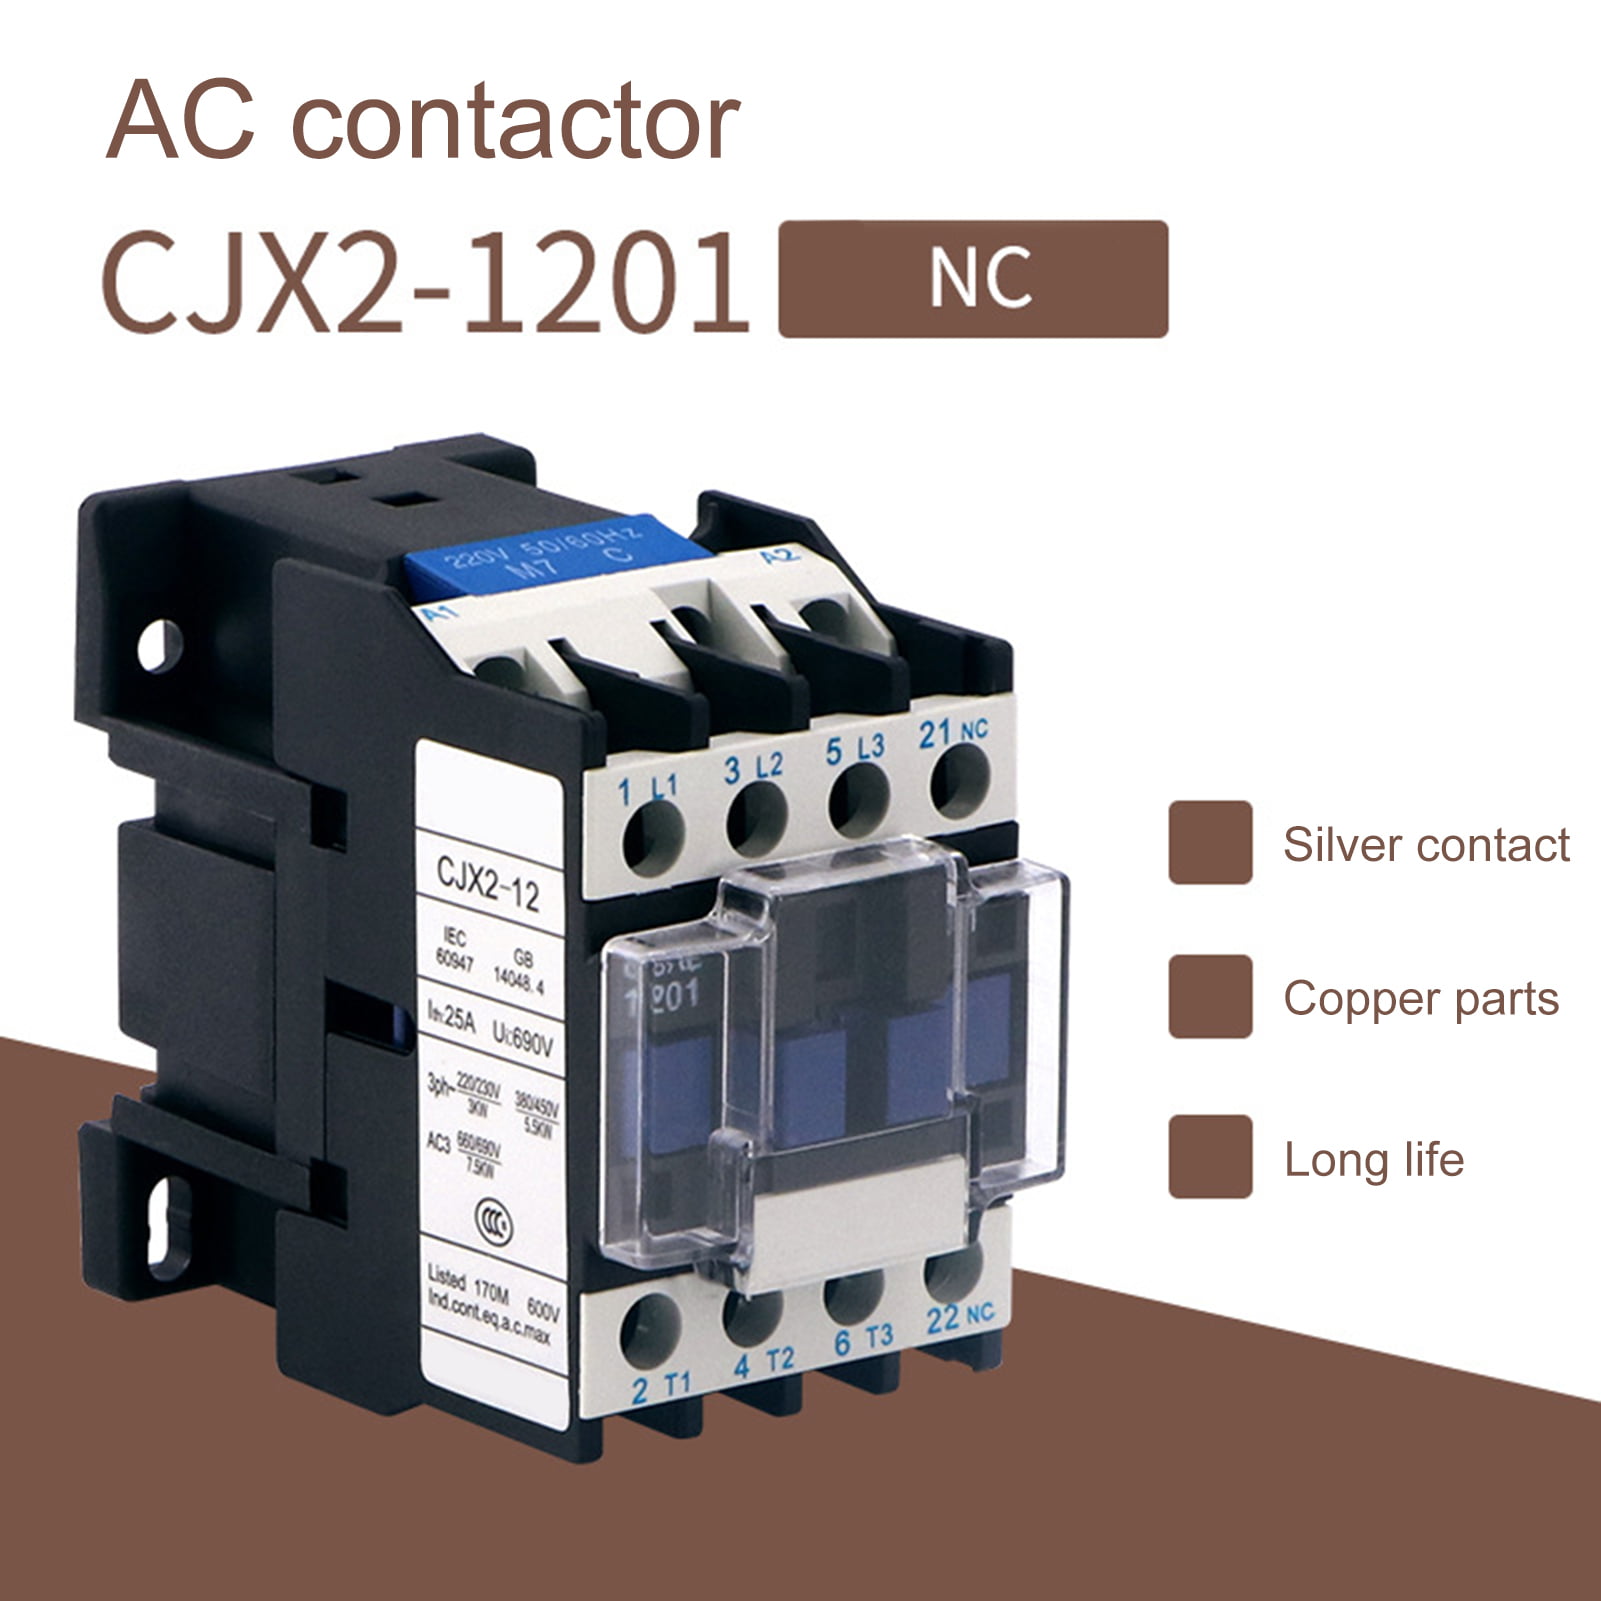 CJX2-1201 AC Contactor 110V 50/60Hz Coil 12A 3-Phase 3-Pole 1NC